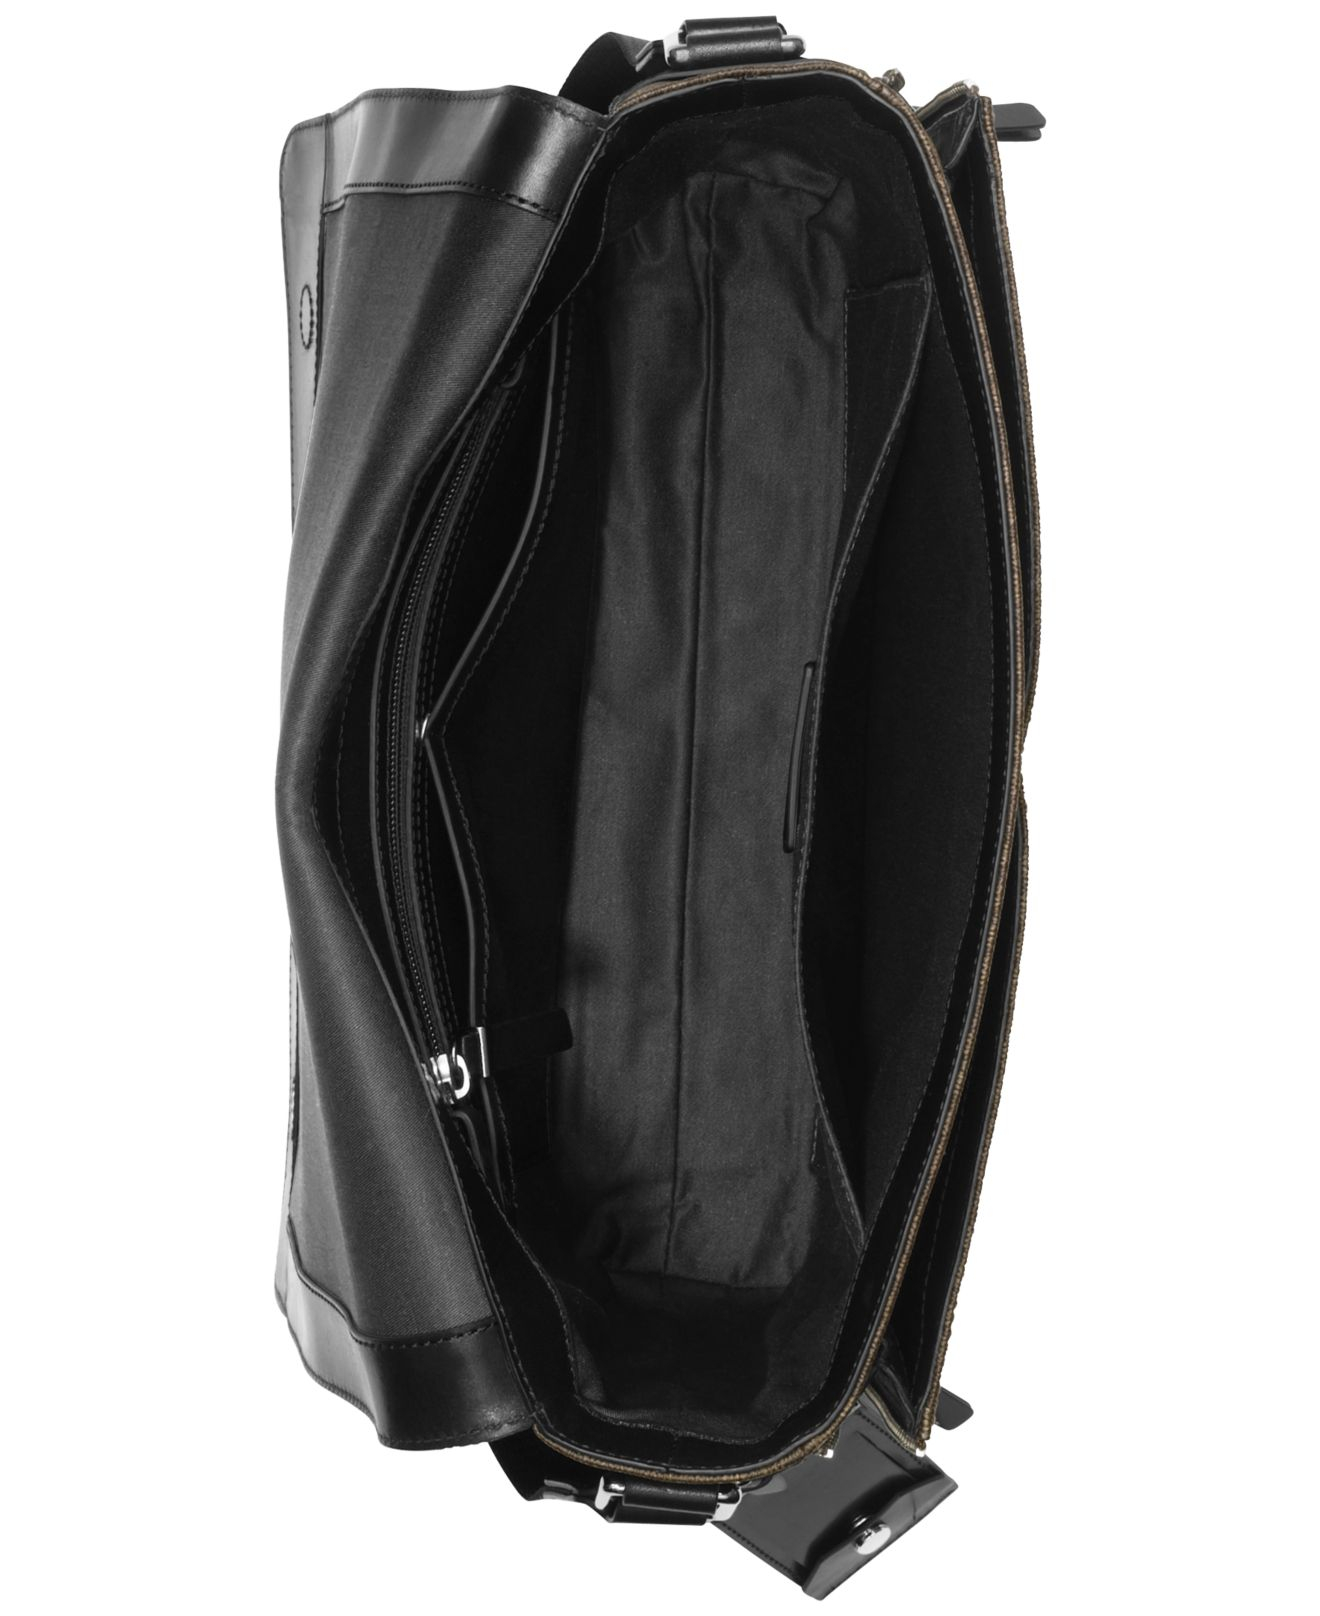 Michael Kors Jet Set Large Messenger Bag in Black for Men - Lyst